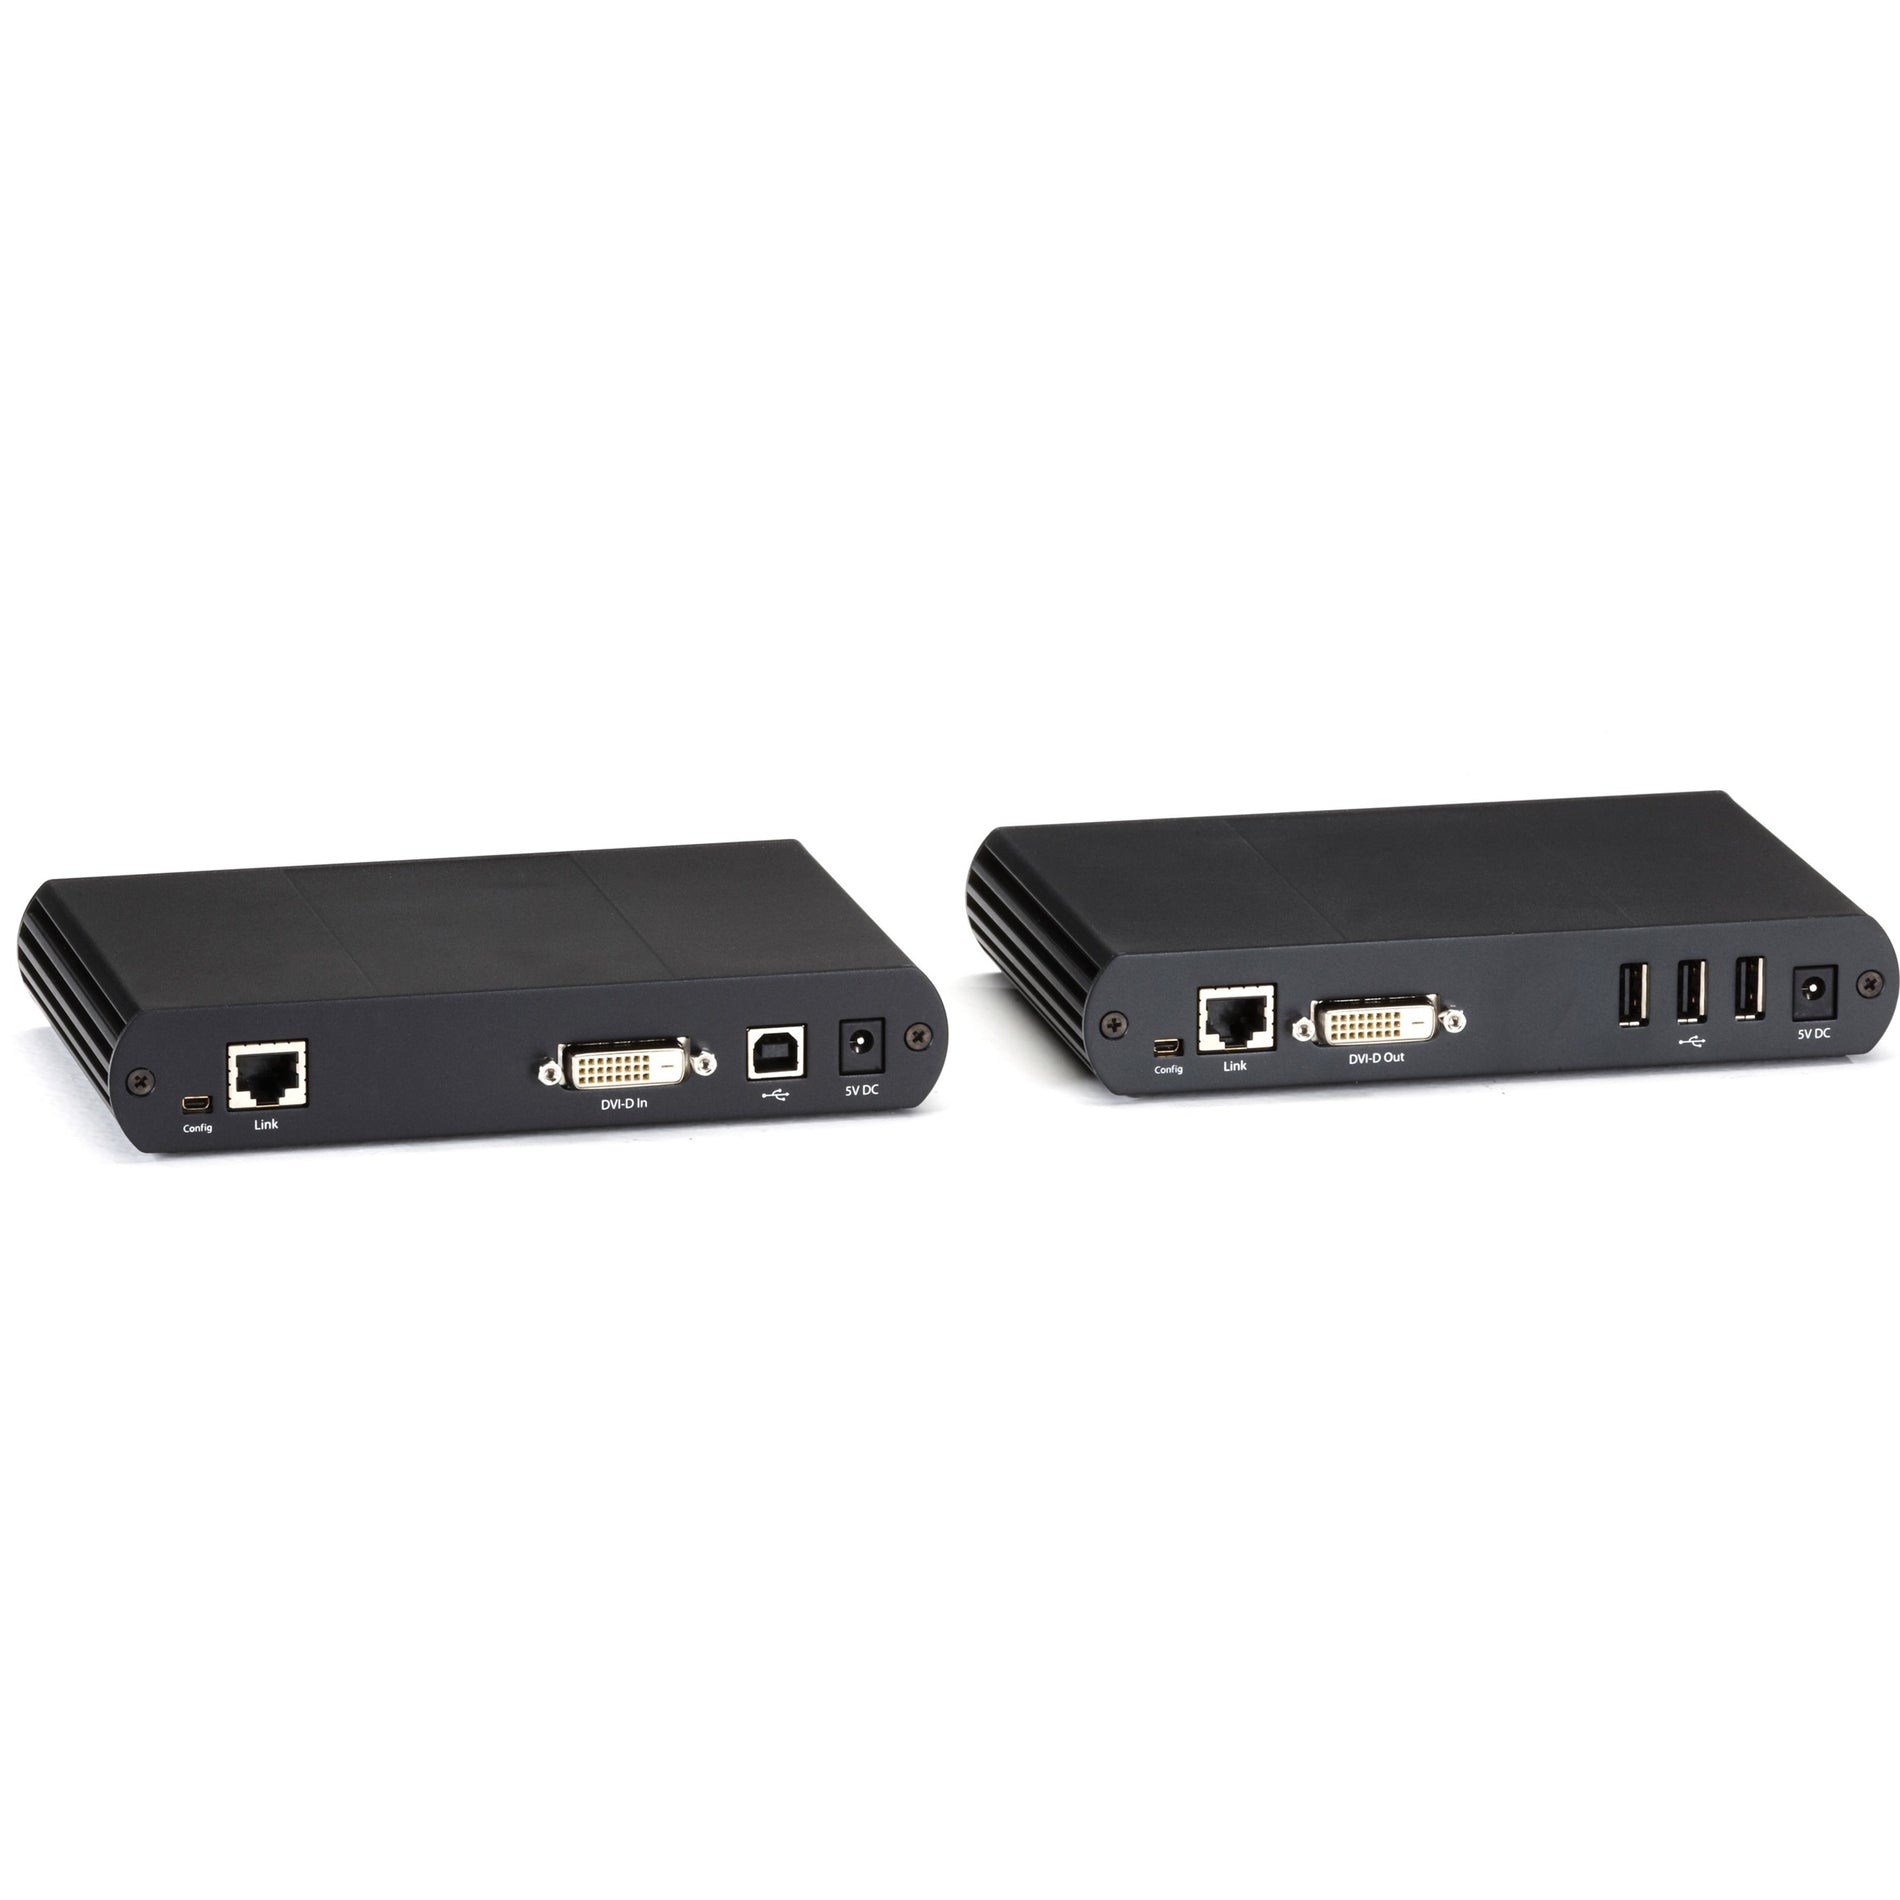 Black Box ACU1500A-R3 KVM Extender - DVI-D, USB 2.0, Full HD Resolution, 328 ft Range